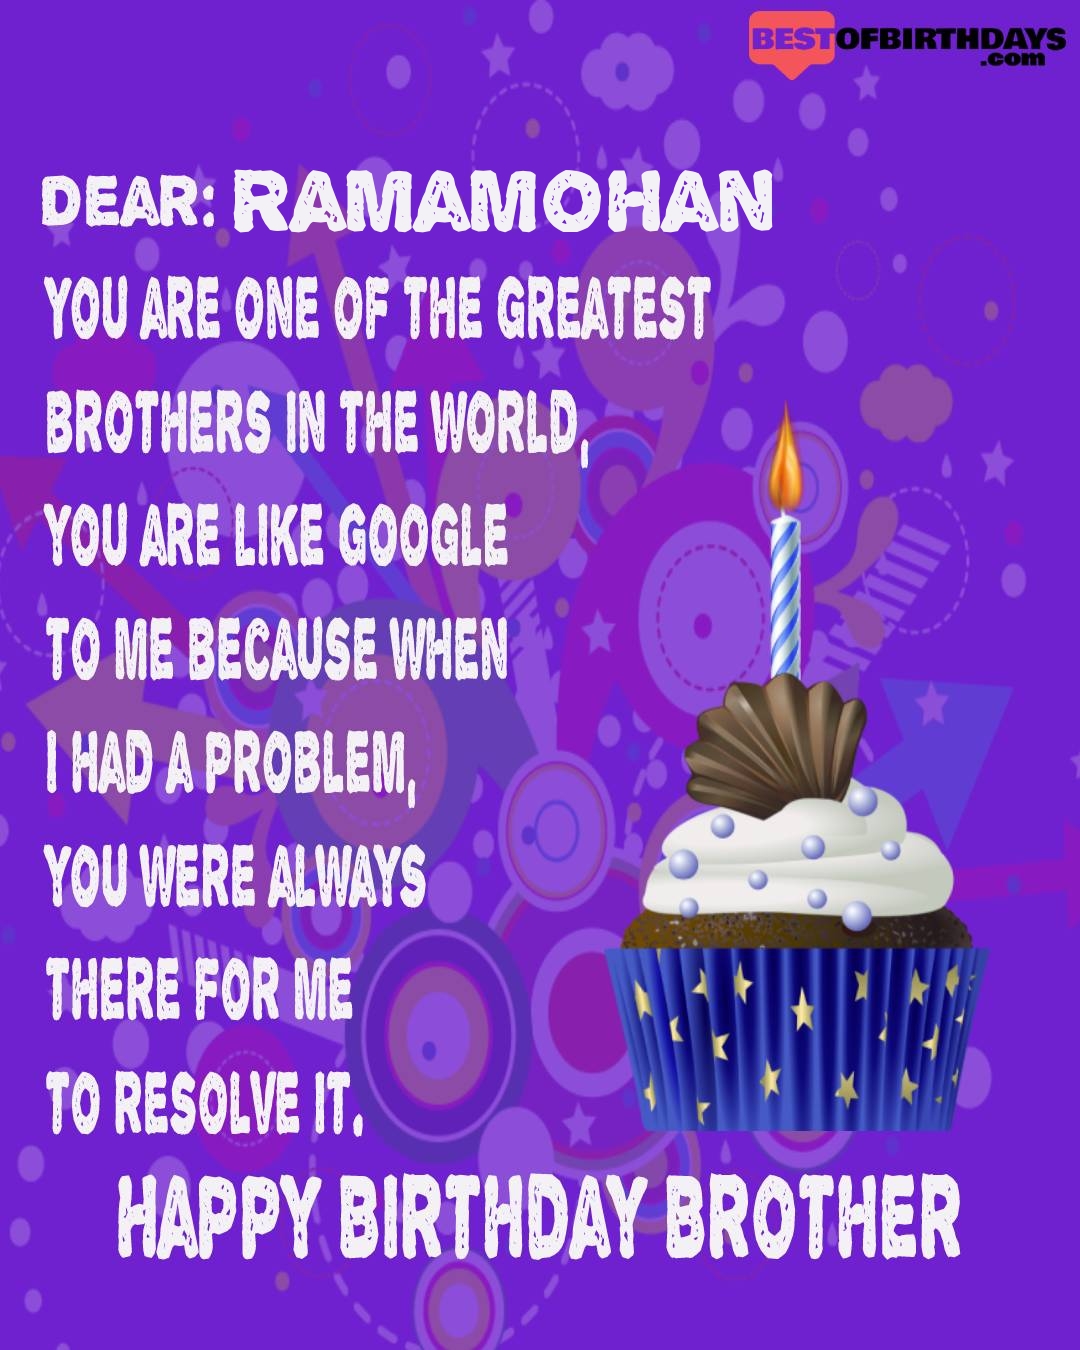 Happy birthday ramamohan bhai brother bro